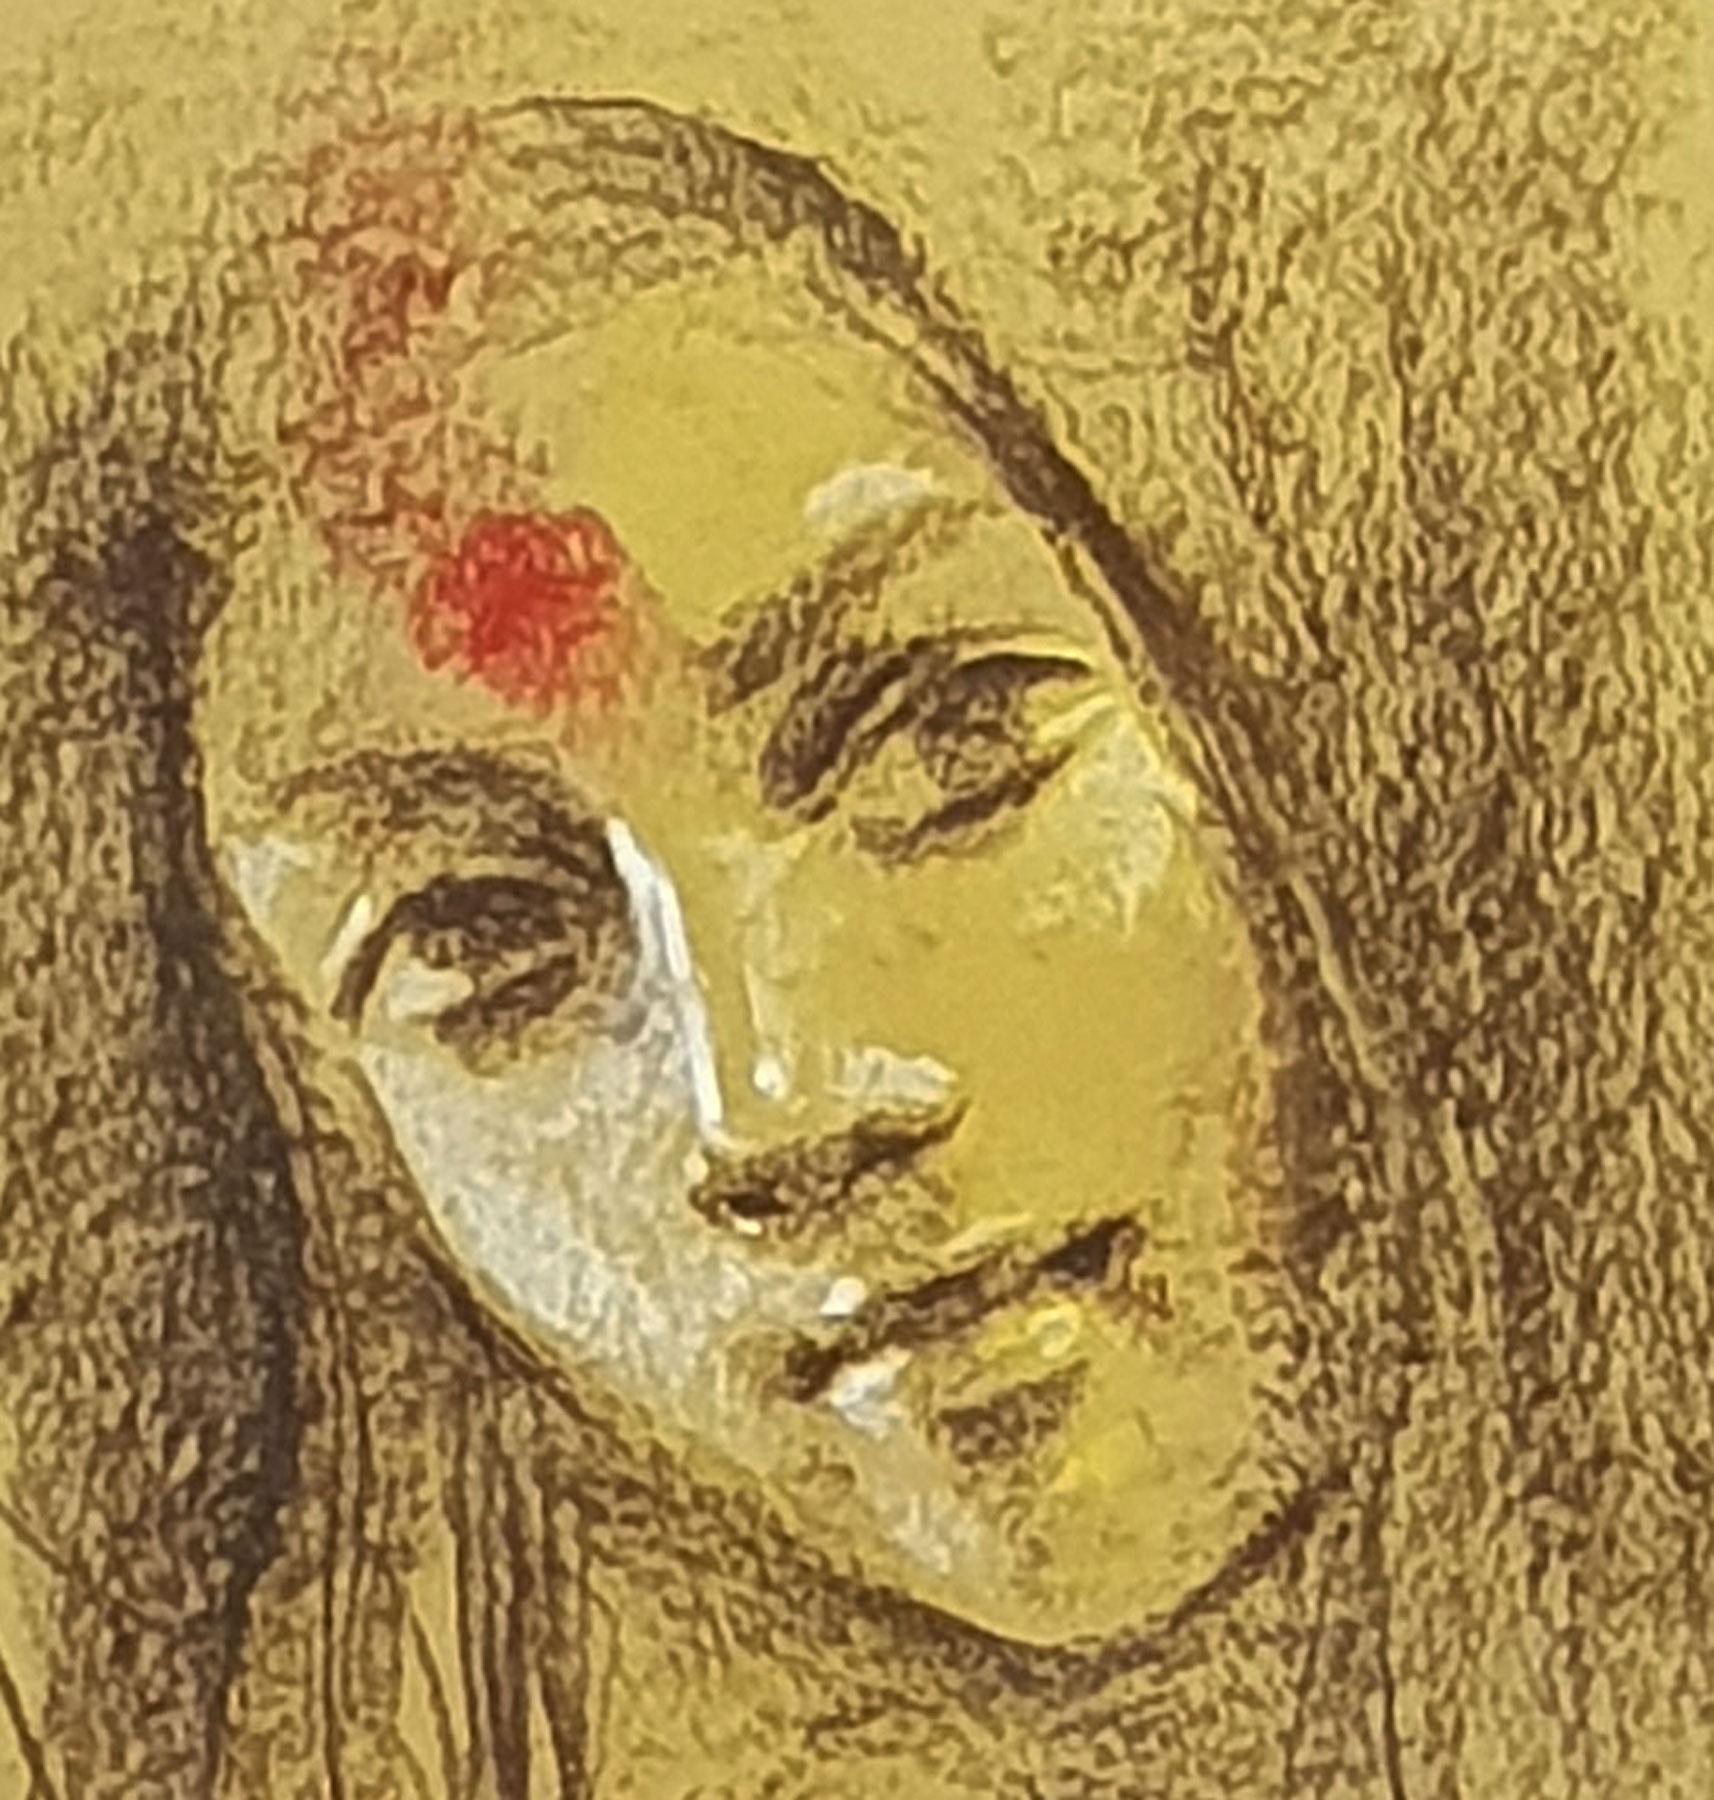 bengali woman painting